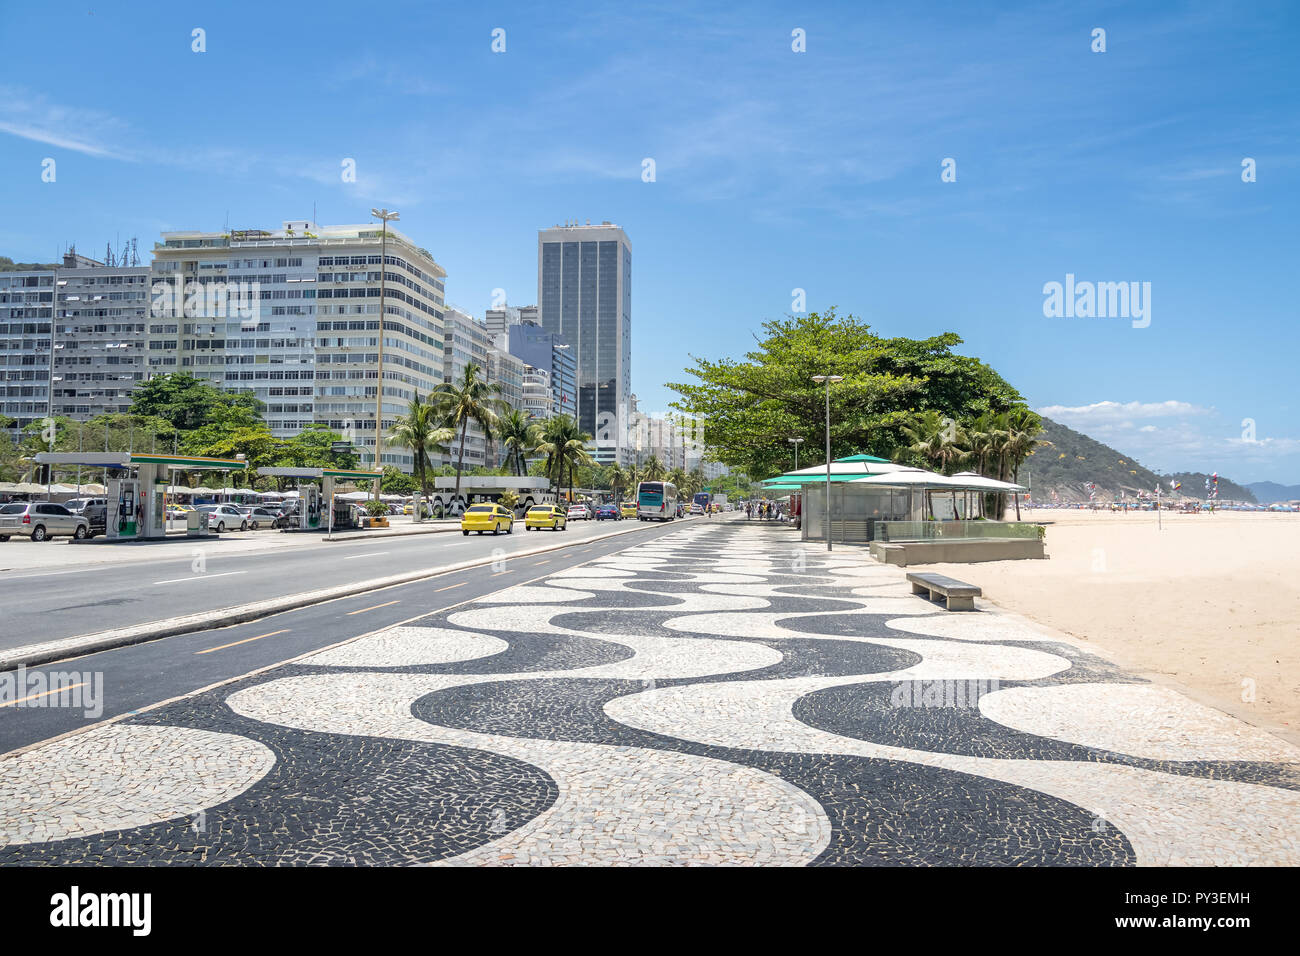 Spiaggia di Copacabana - Rio de Janeiro, Brasile Foto Stock